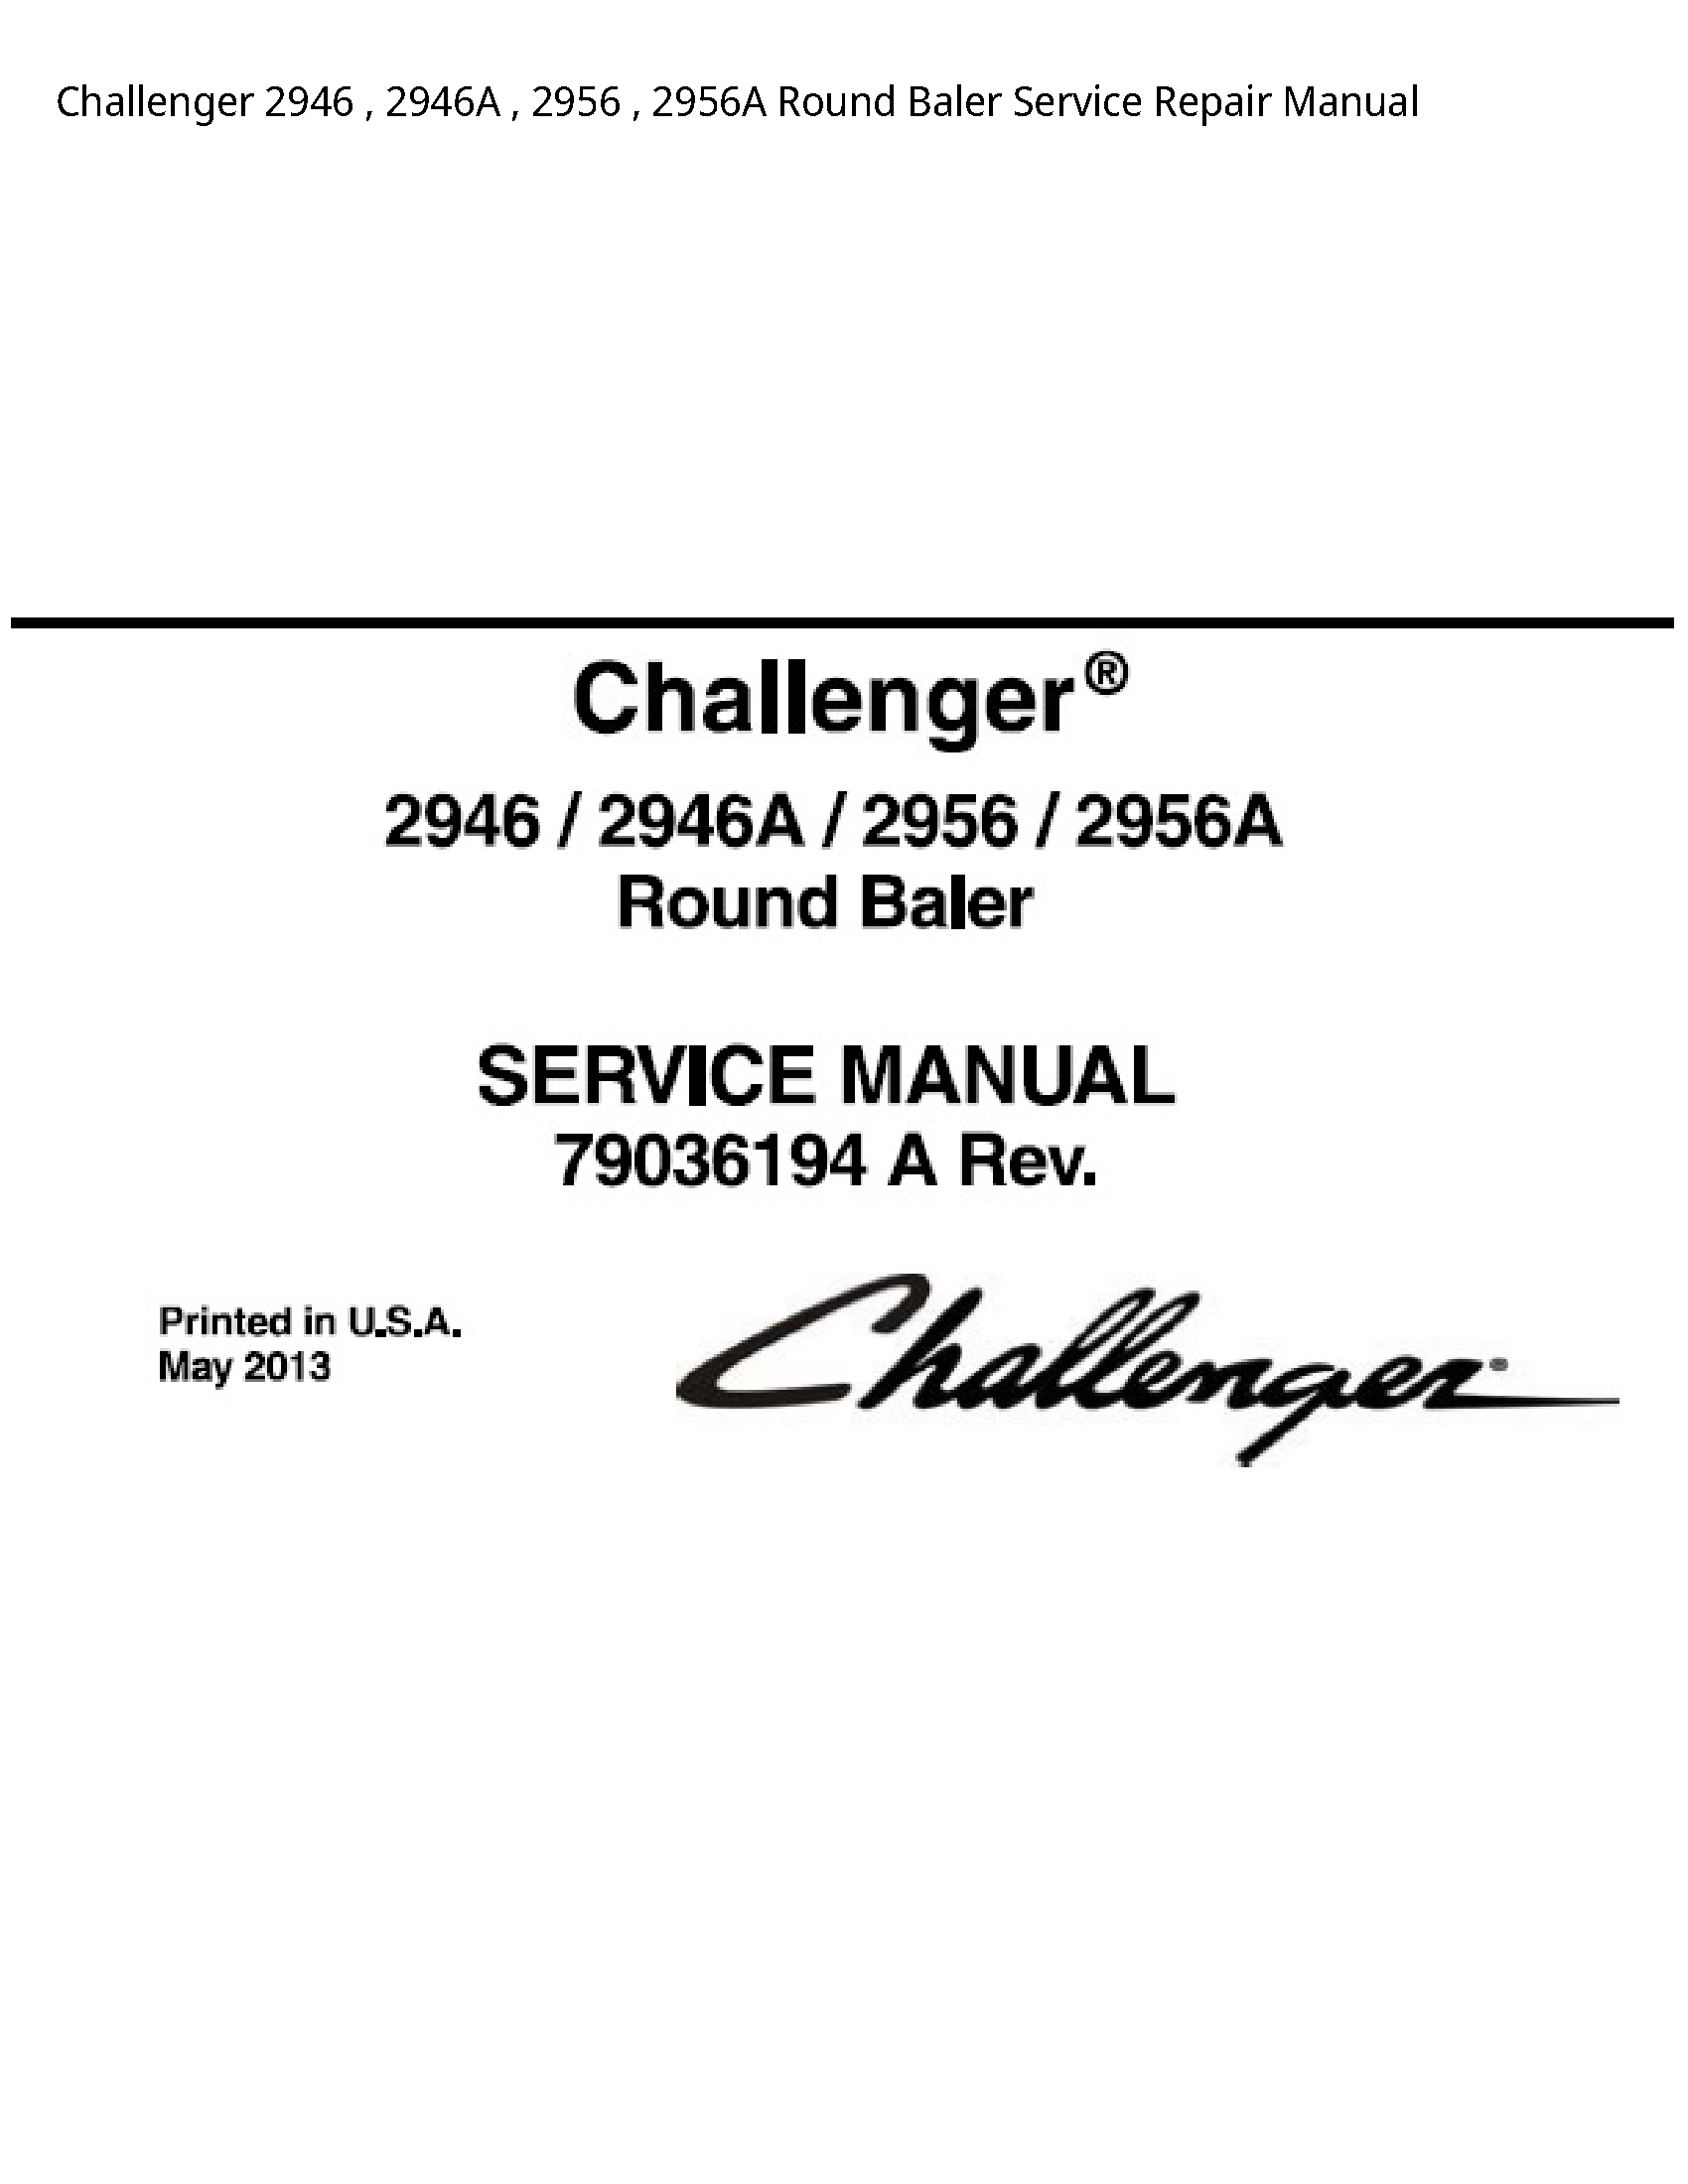 Challenger 2946 Round Baler manual